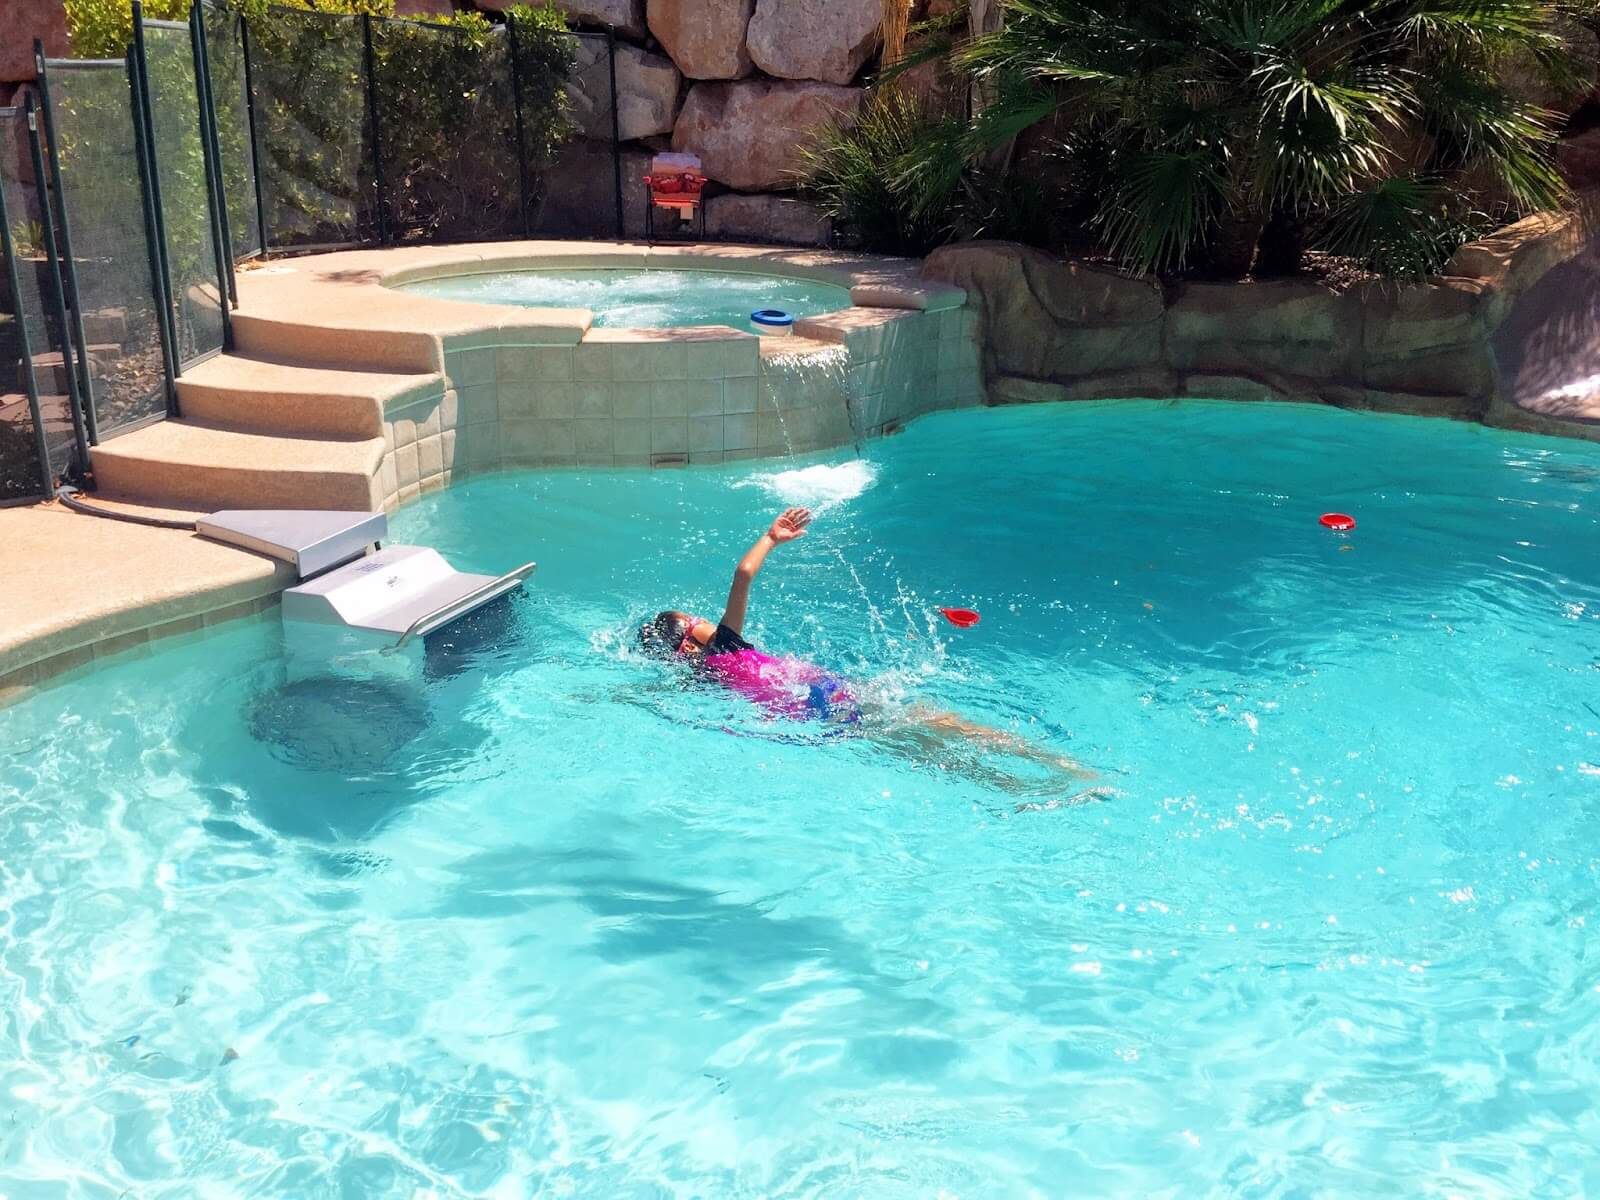 When Rod isn't triathlon training, his daughter enjoys the Endless Pools Fastlane